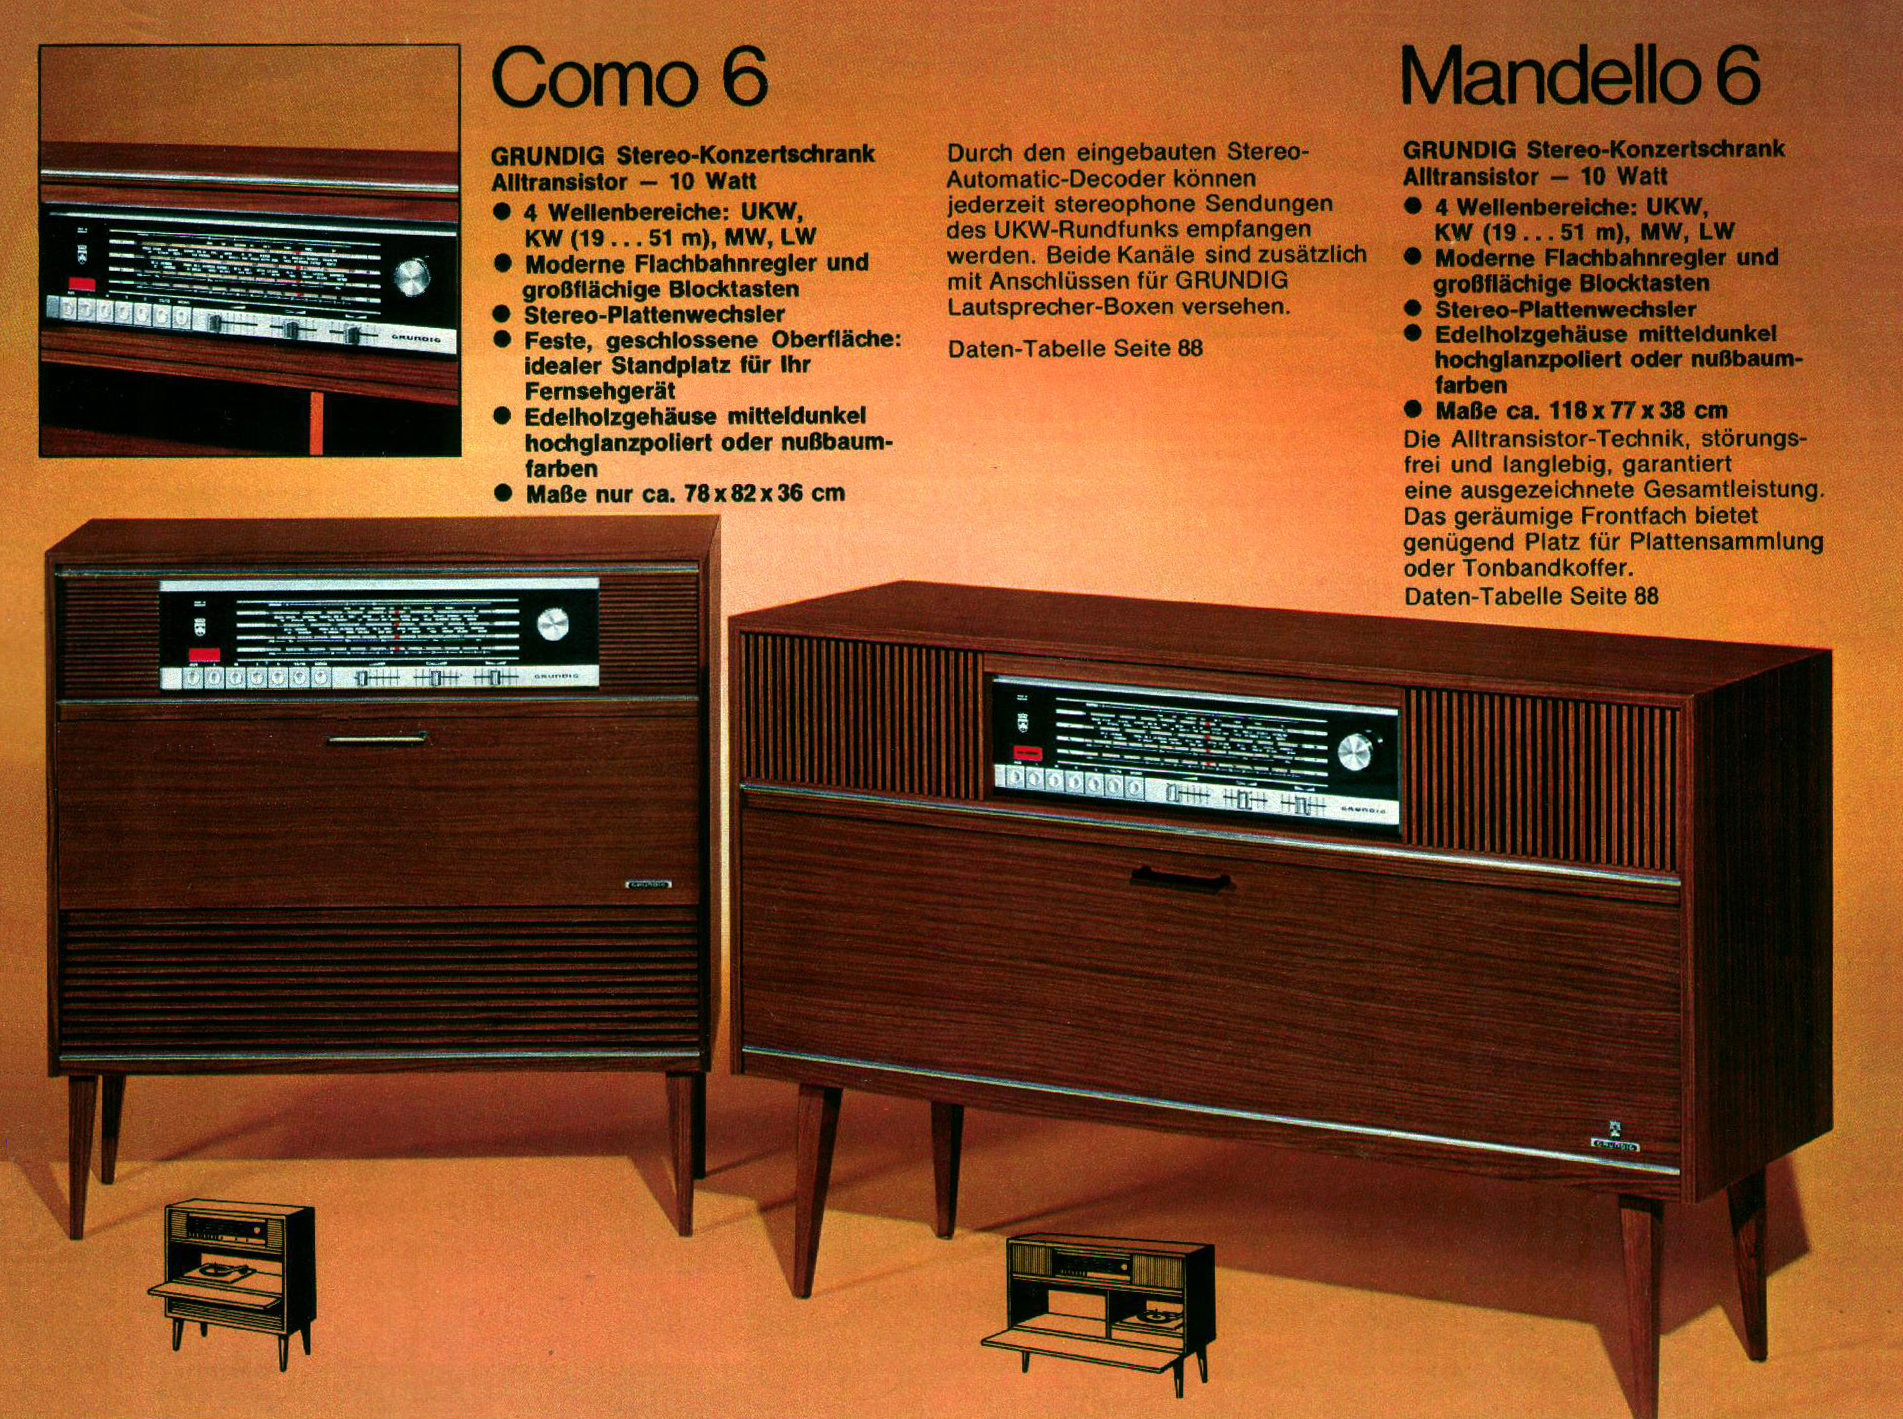 Grundig Como-Mandello 6-Prospekt-1972.jpg